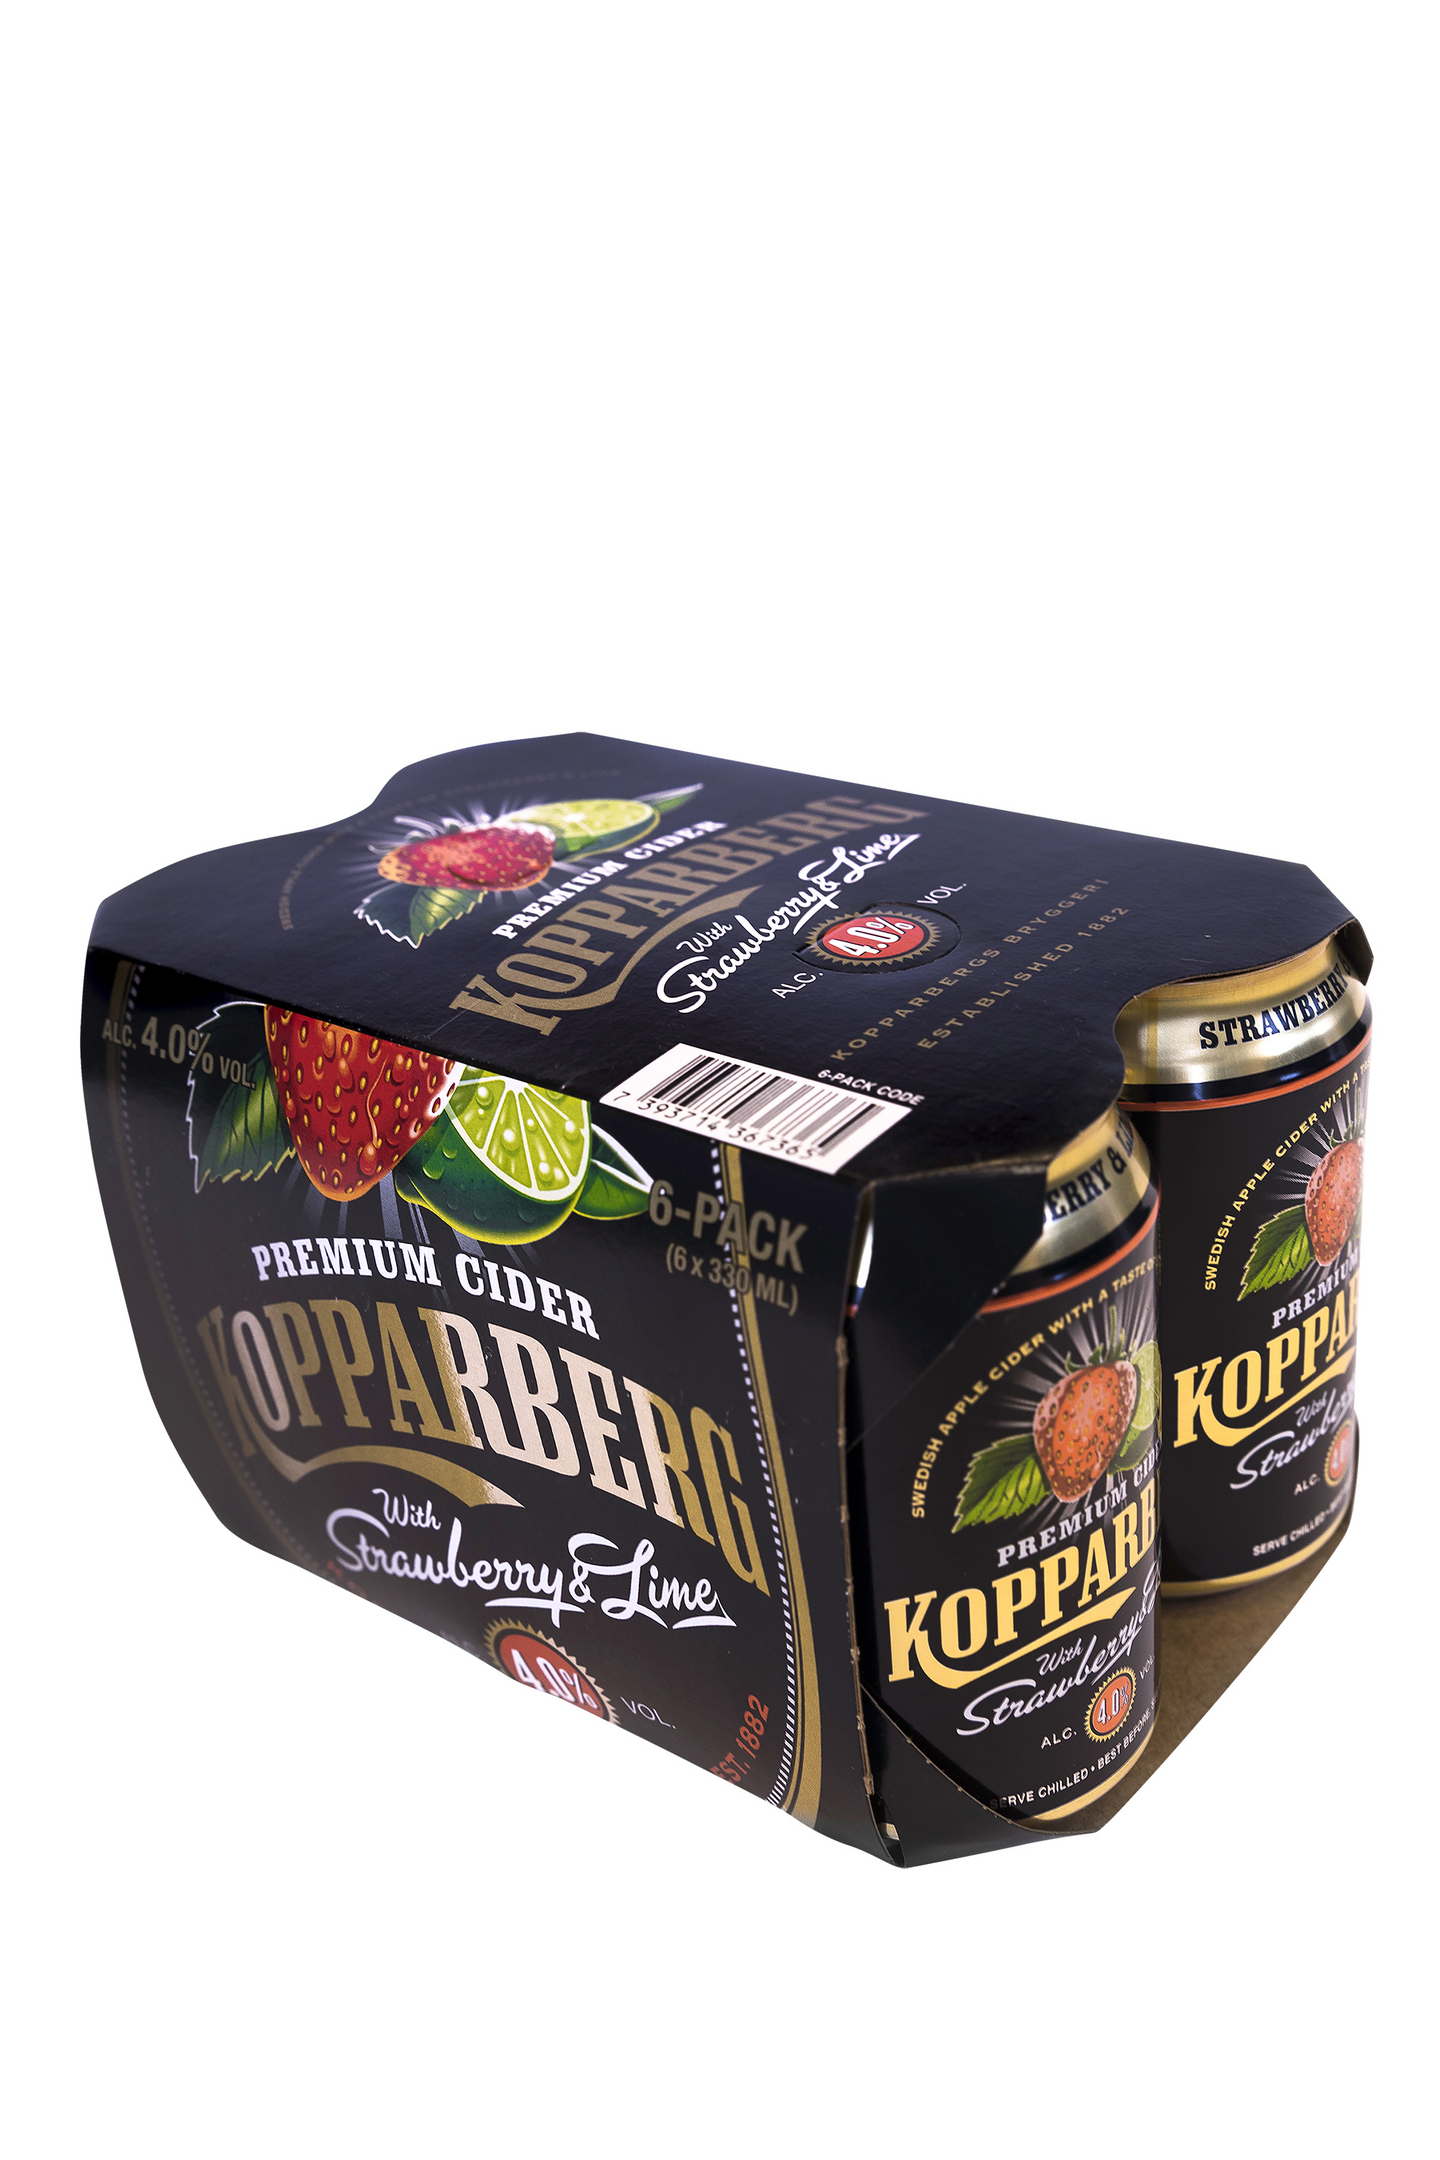 Kopparberg Strawberry & lime 4% 0,33l 6-pack DOLLY